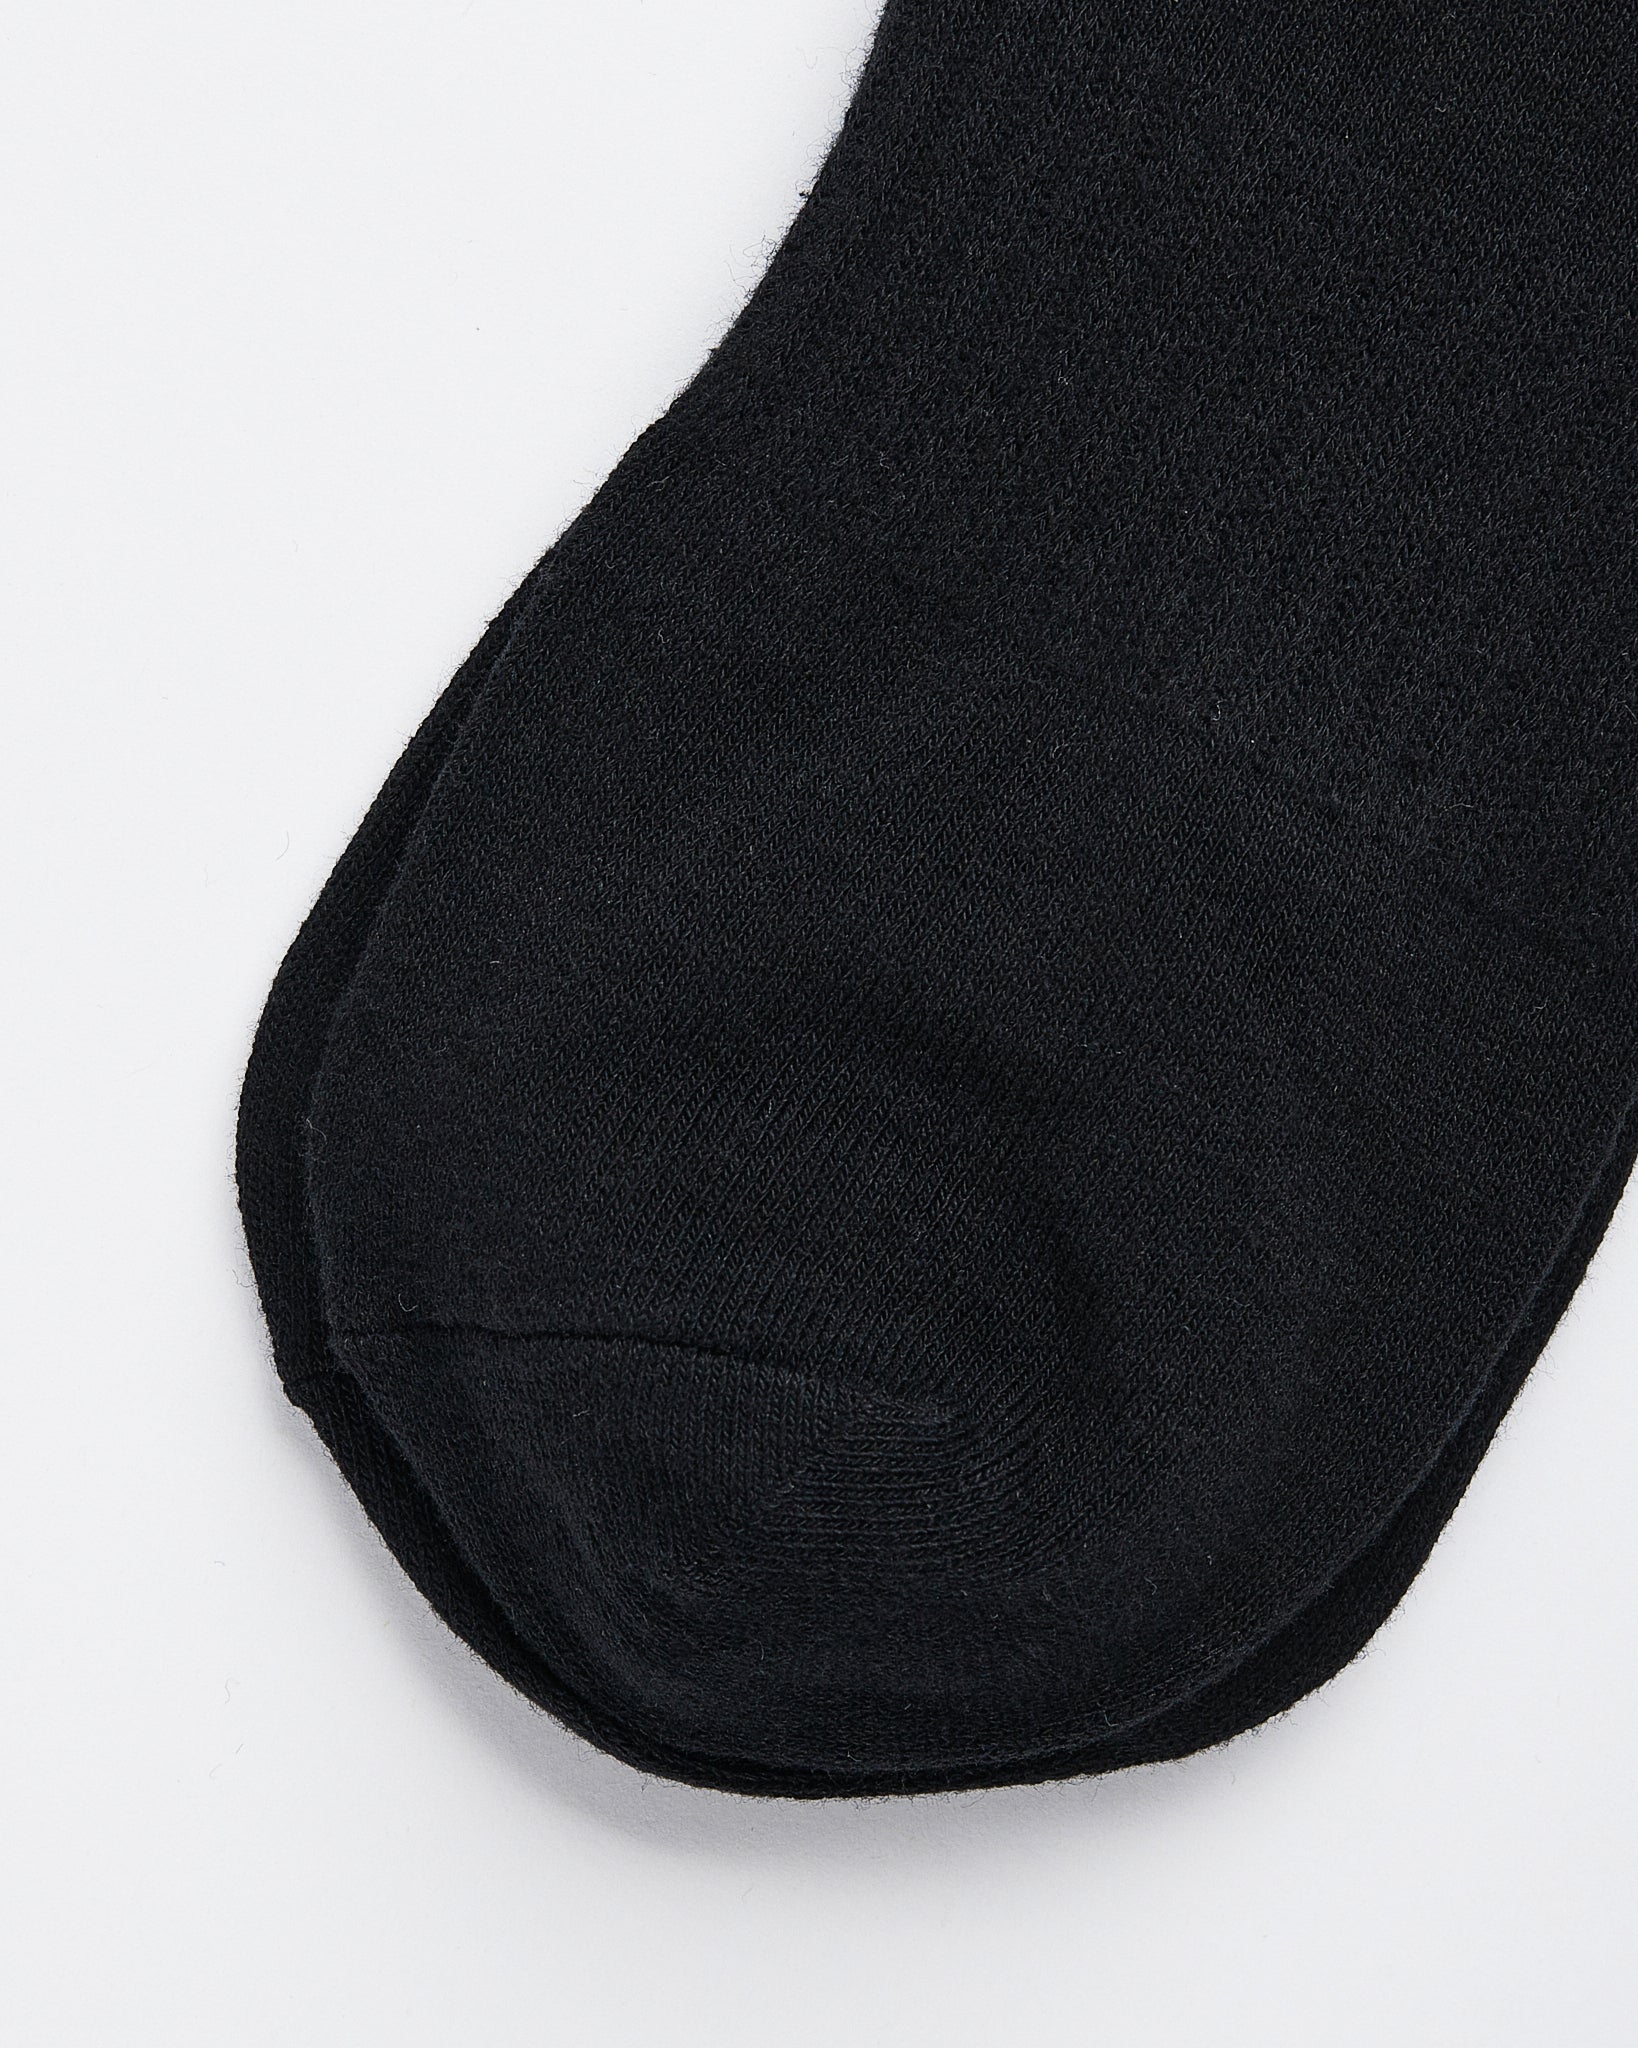 NIK Black 1 Pairs Quarter Socks 2.10